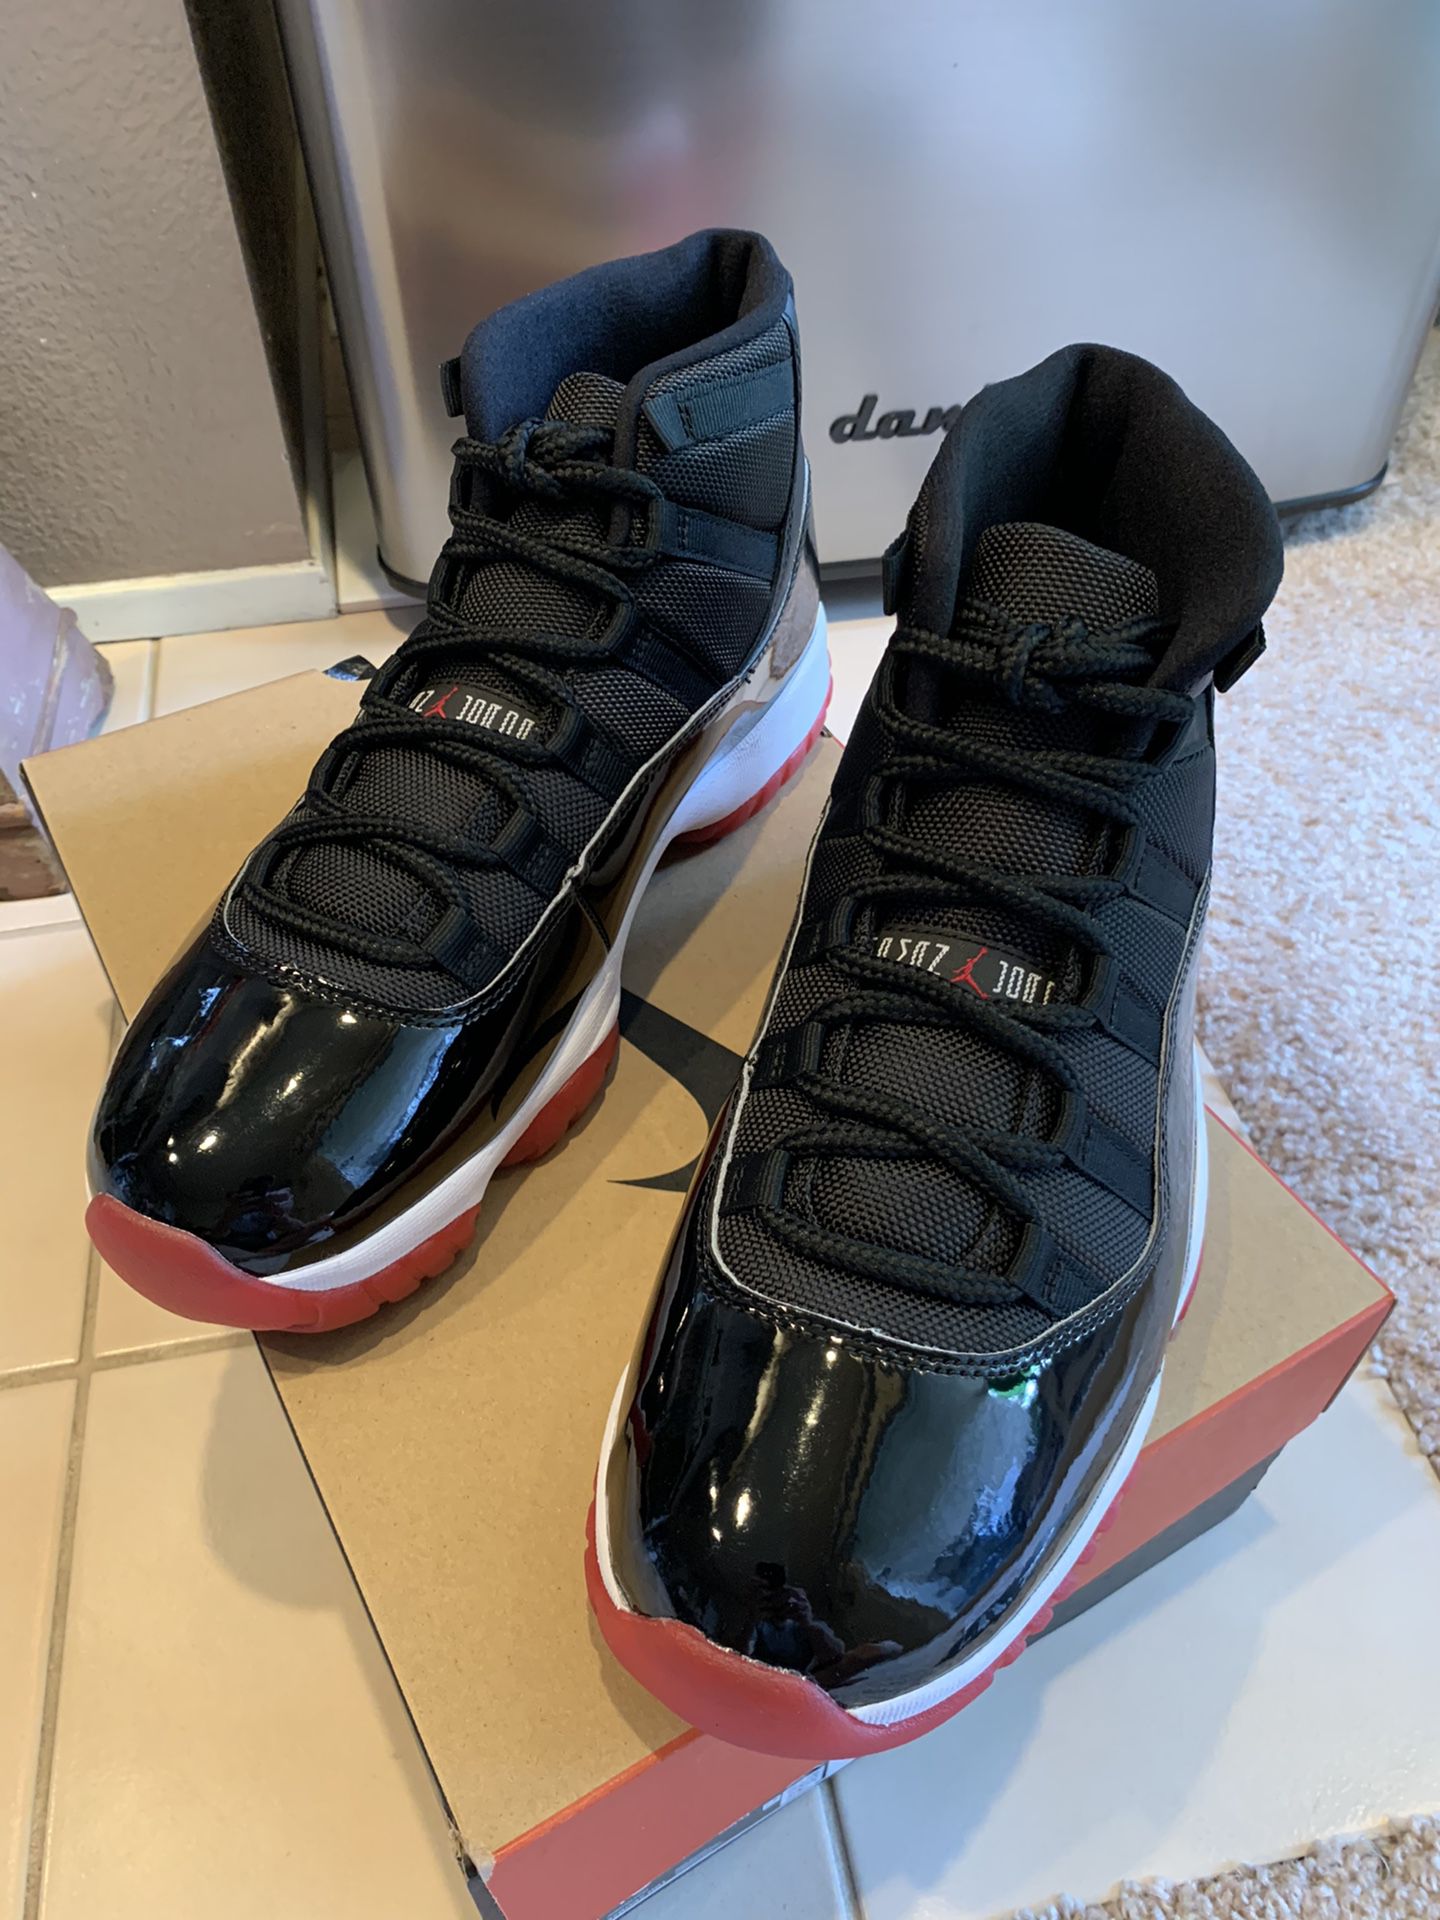 Custom Jordan 11 Retro GS Bred 2019 for Sale in Las Vegas, NV - OfferUp